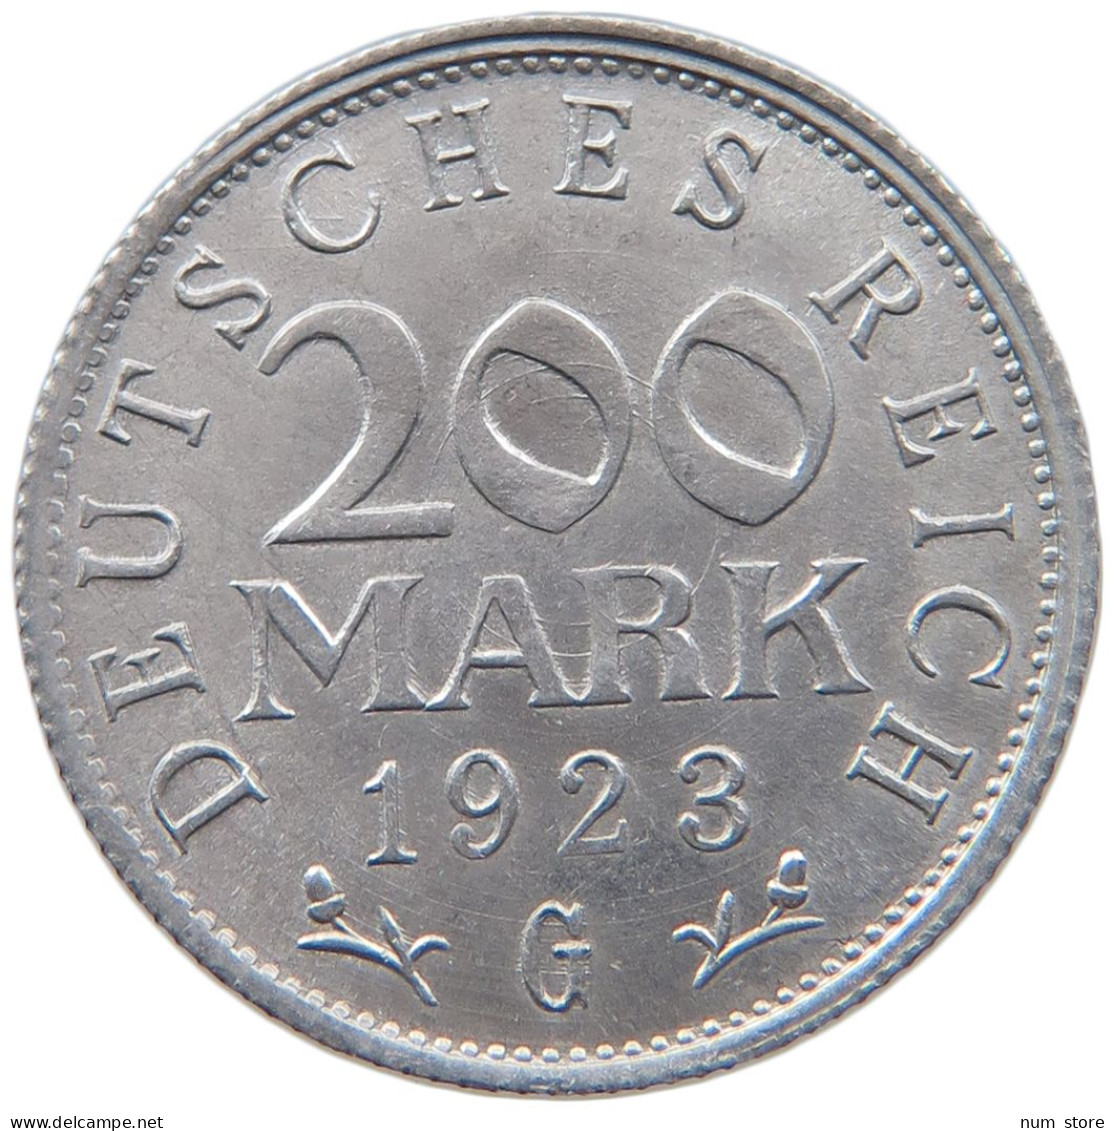 WEIMARER REPUBLIK 200 MARK 1923 G  #MA 098776 - 200 & 500 Mark